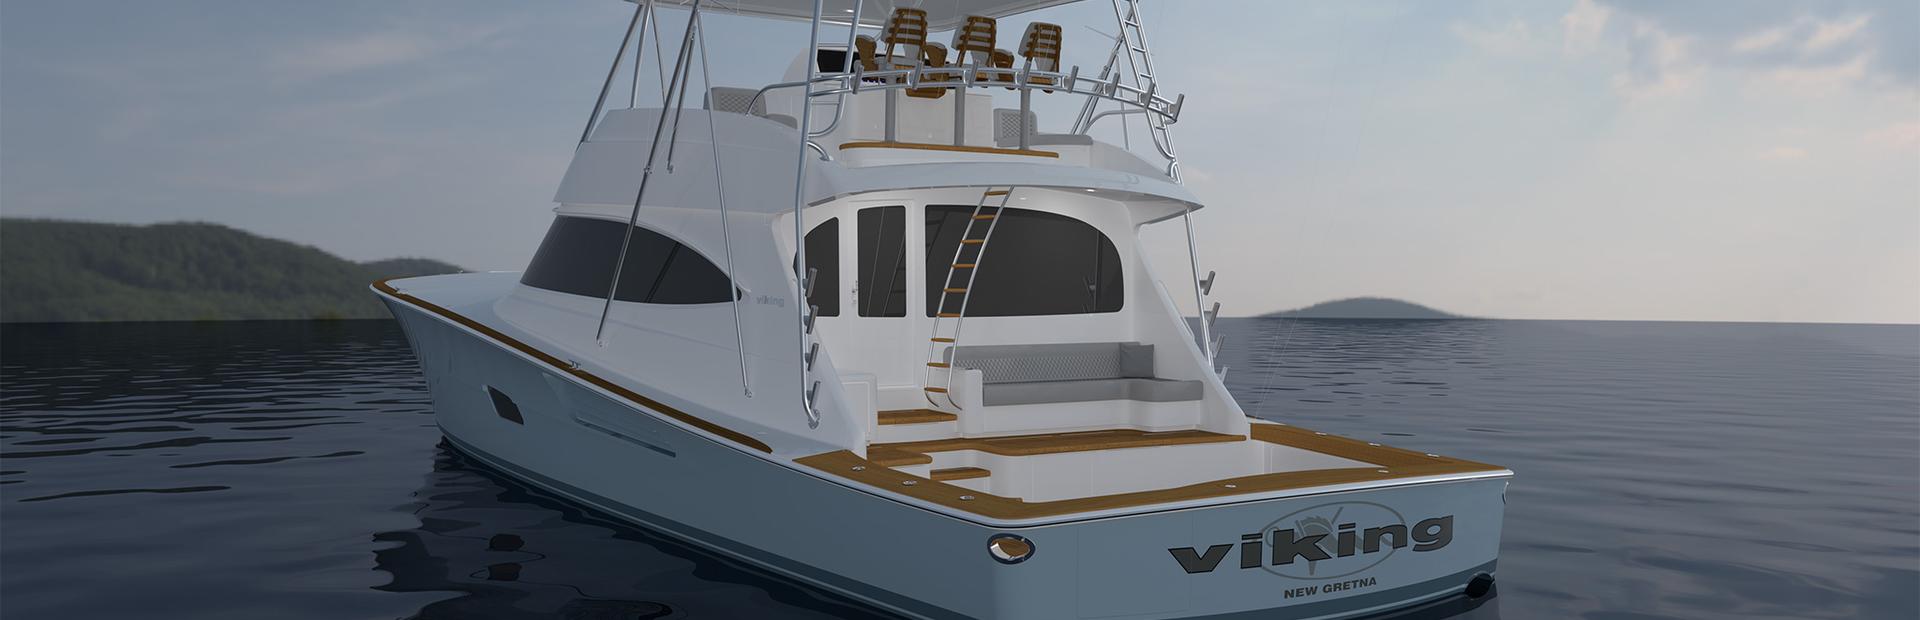 Viking 82C Yacht